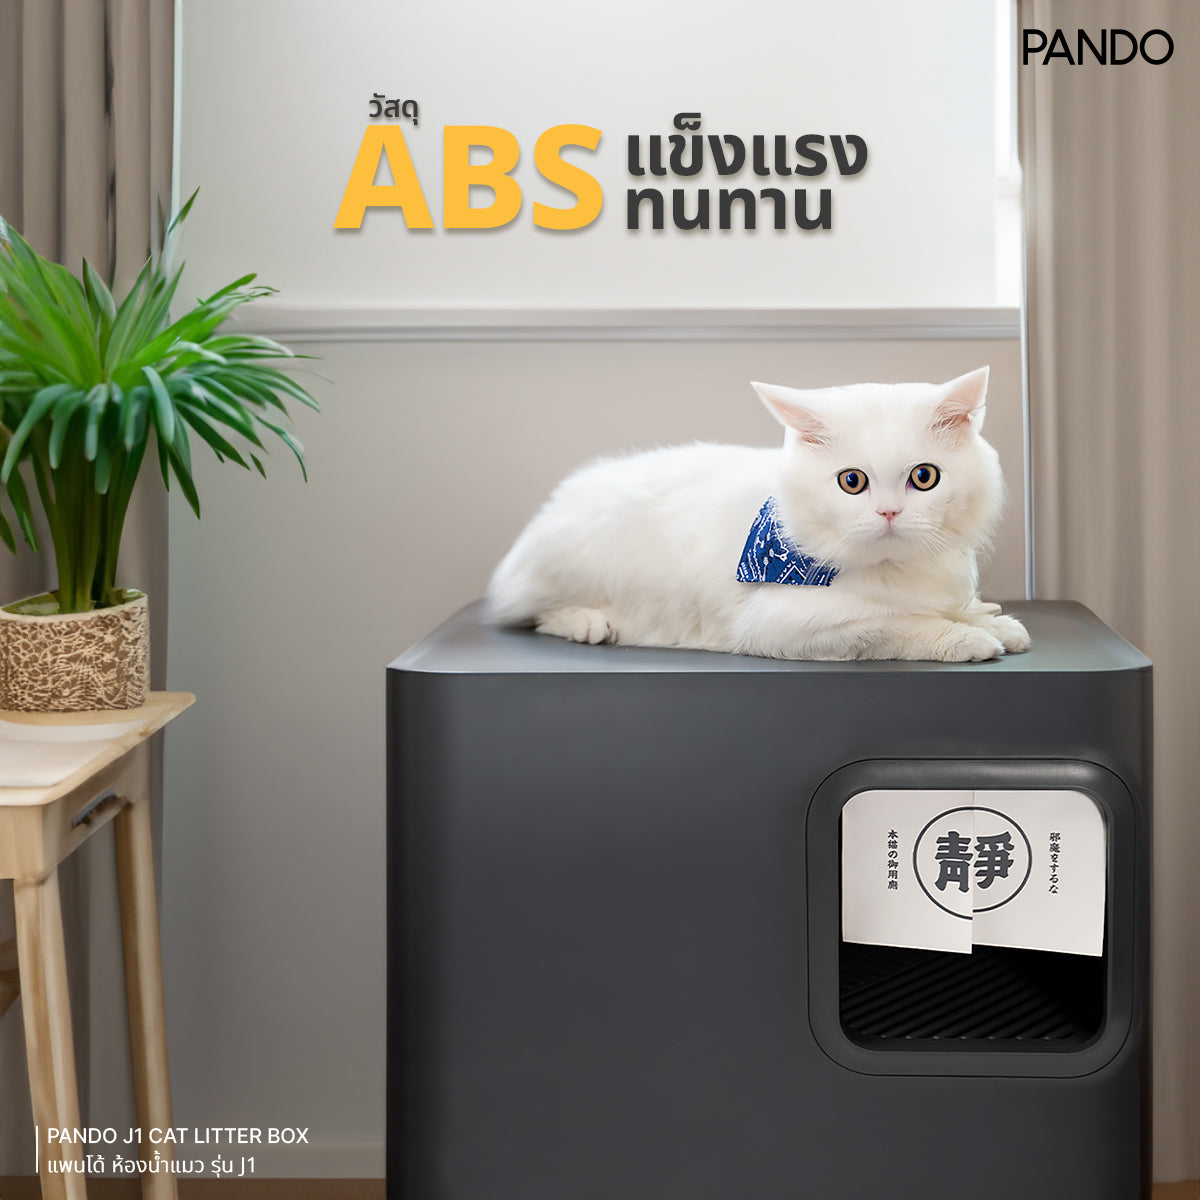 Pando J1 Cat Litter Box